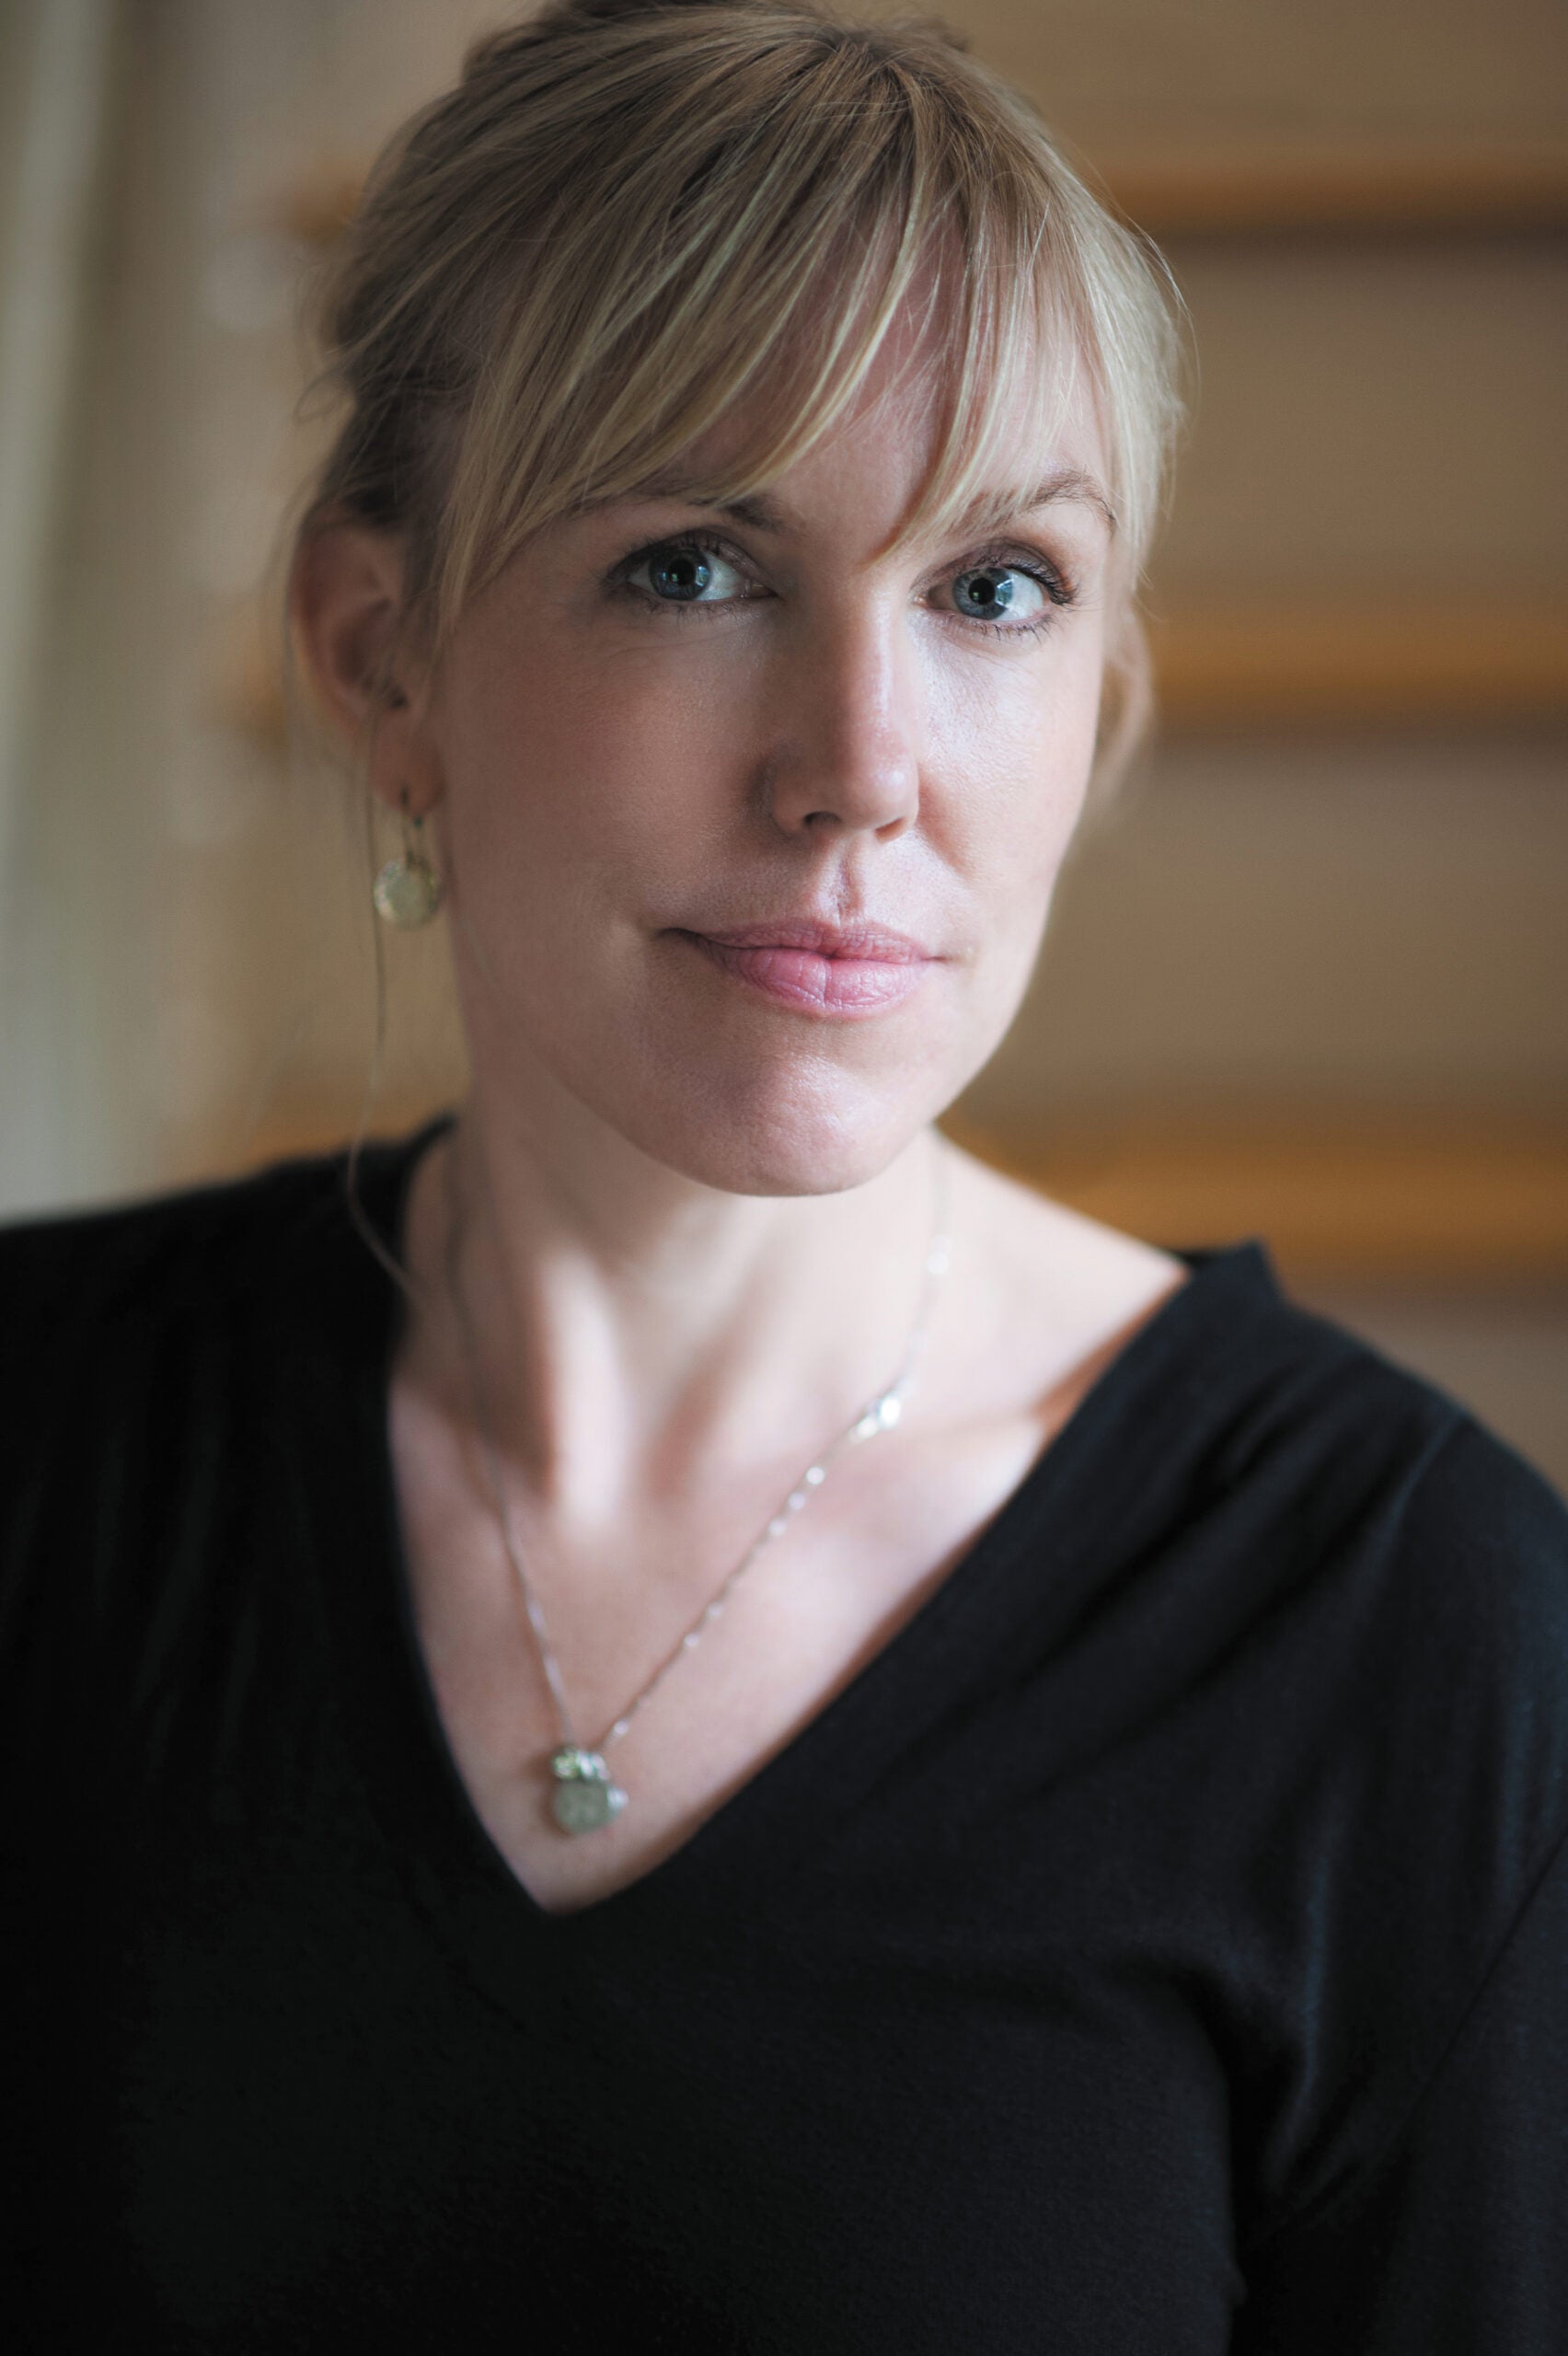 Author Tara Conklin